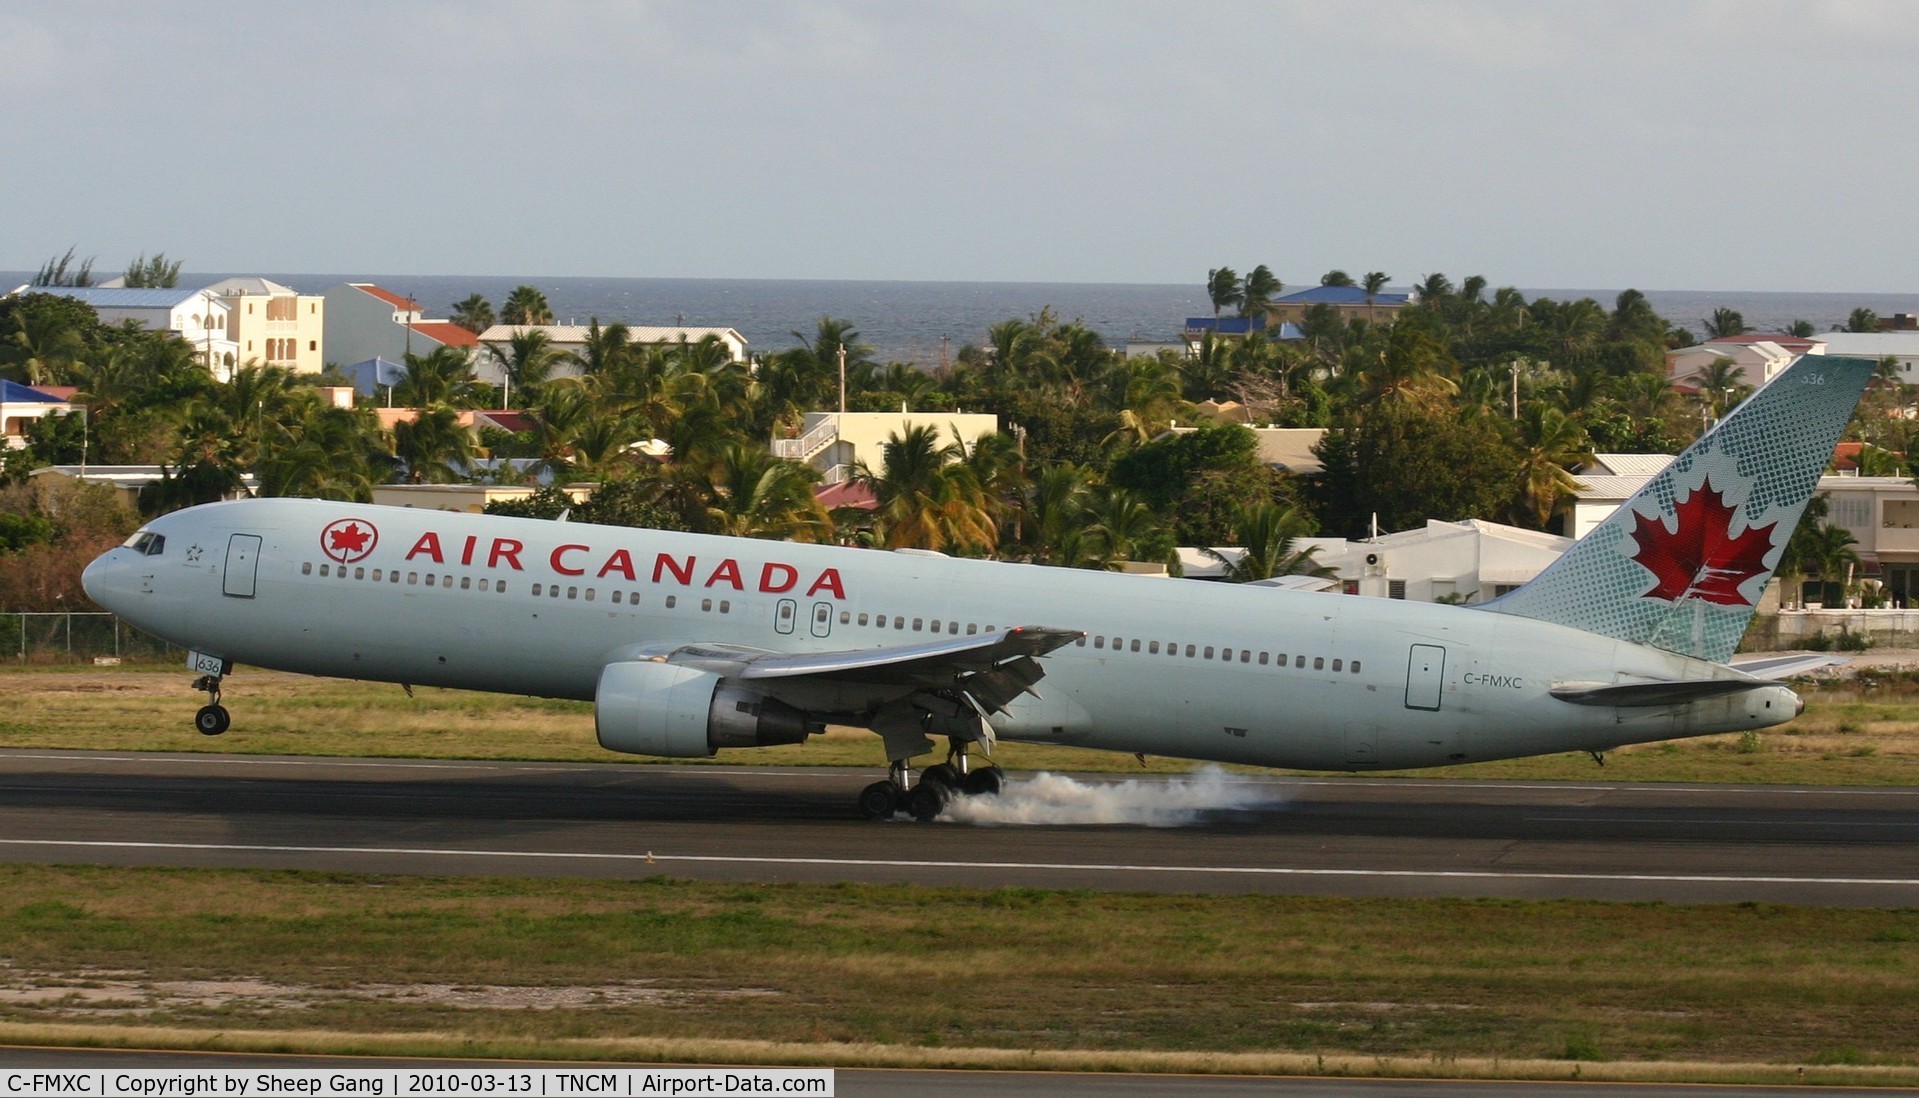 C-FMXC, 1996 Boeing 767-333/ER C/N 25588, Air Canada landing at TNCM